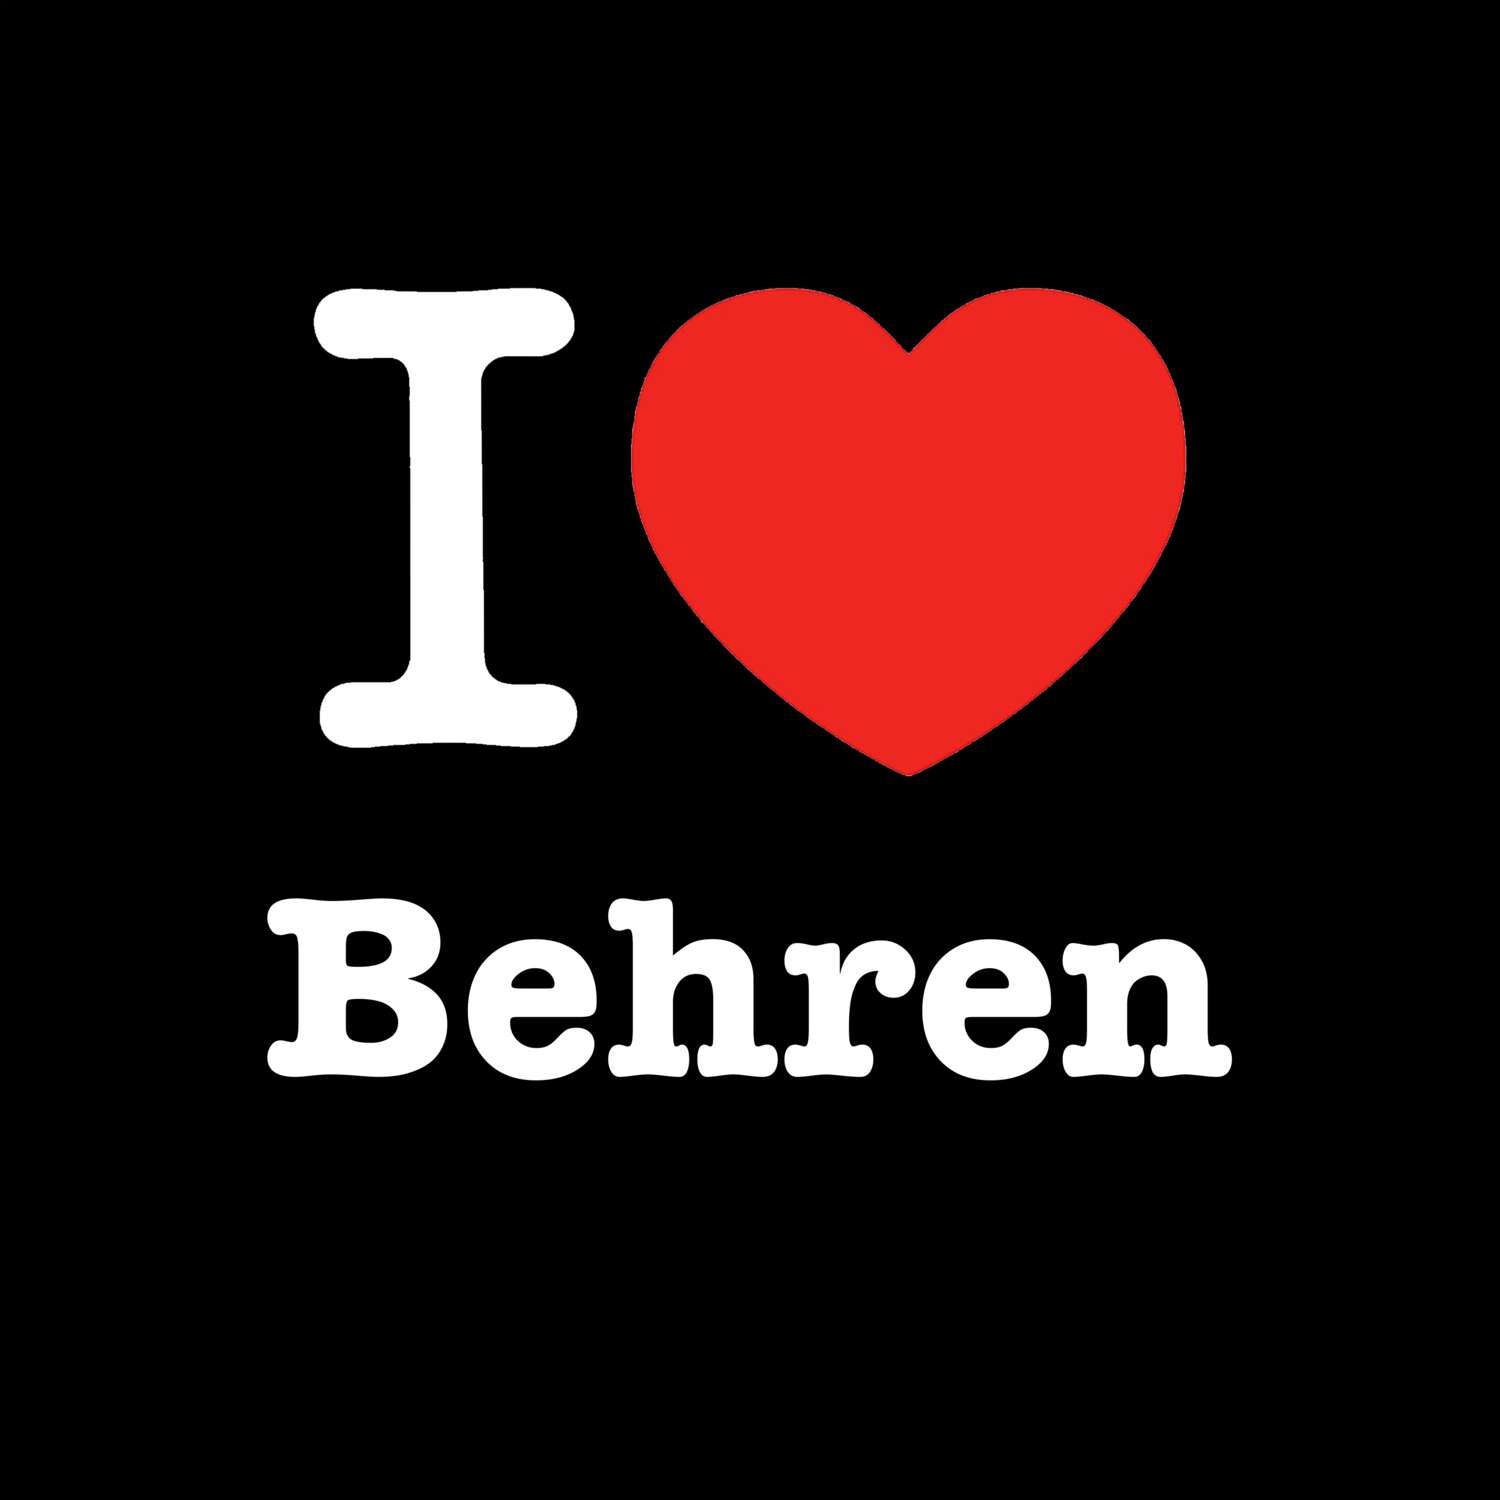 Behren T-Shirt »I love«